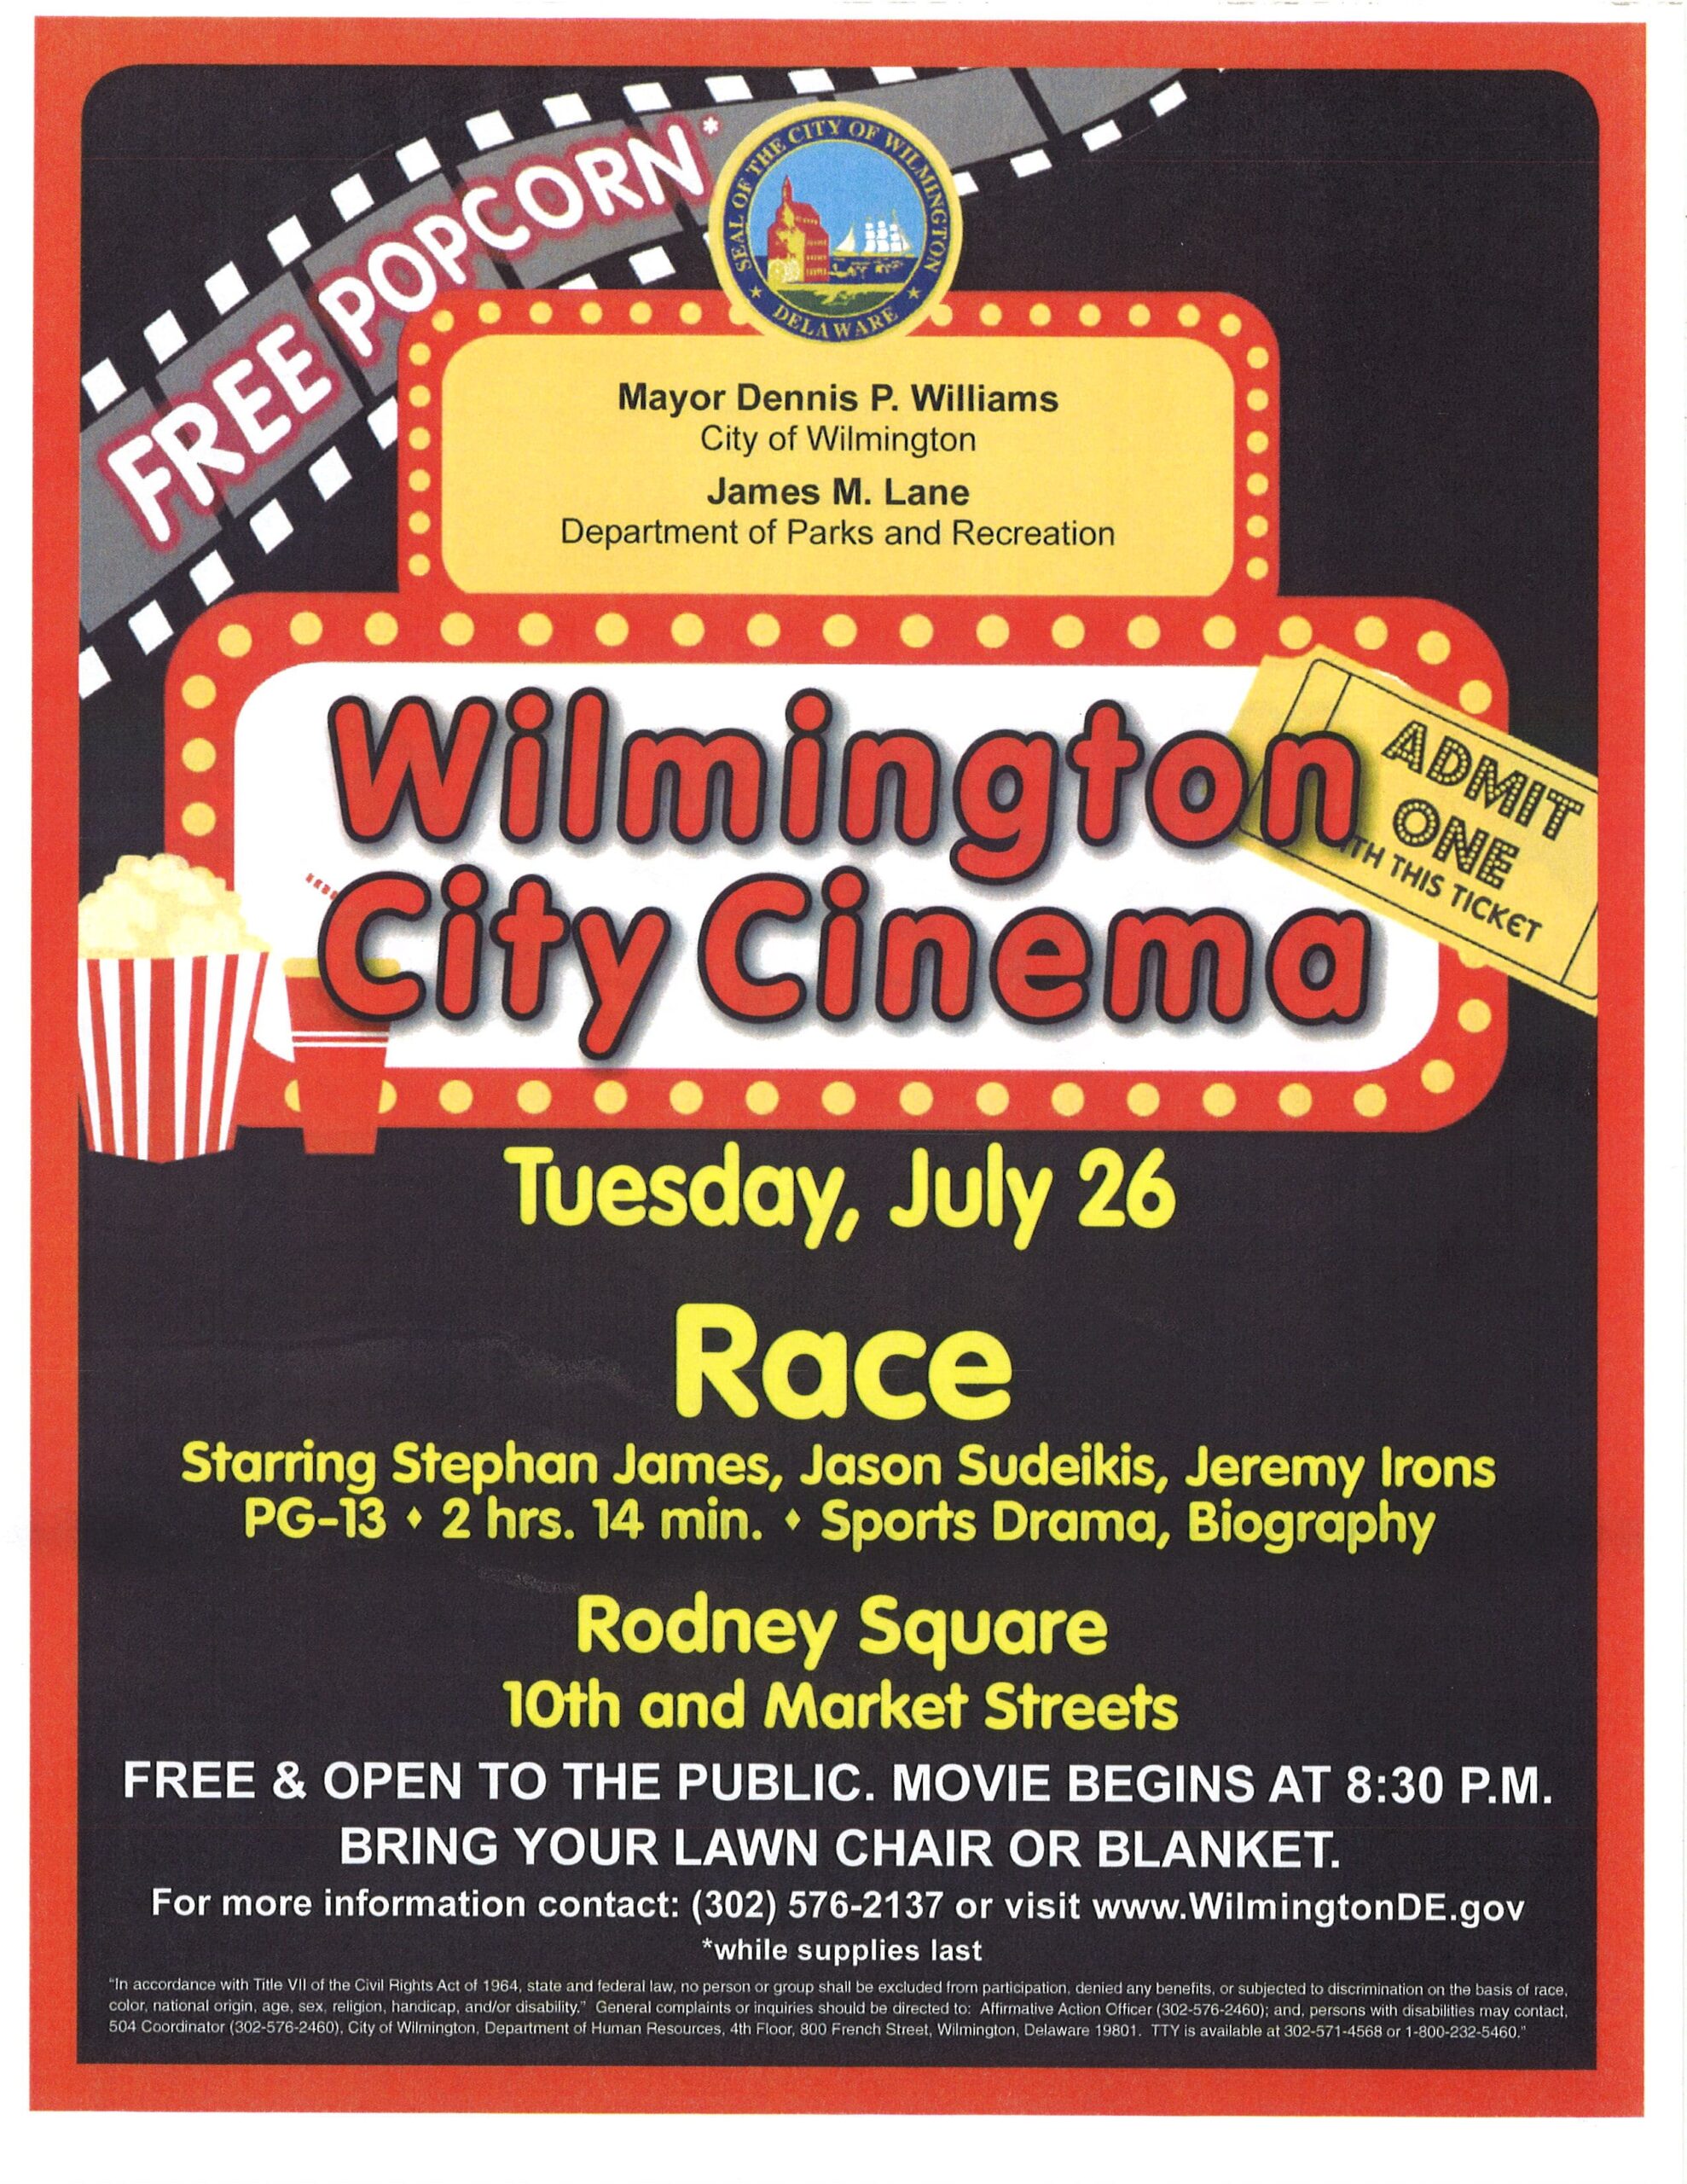 Rodney Square Events Free Movie Nights